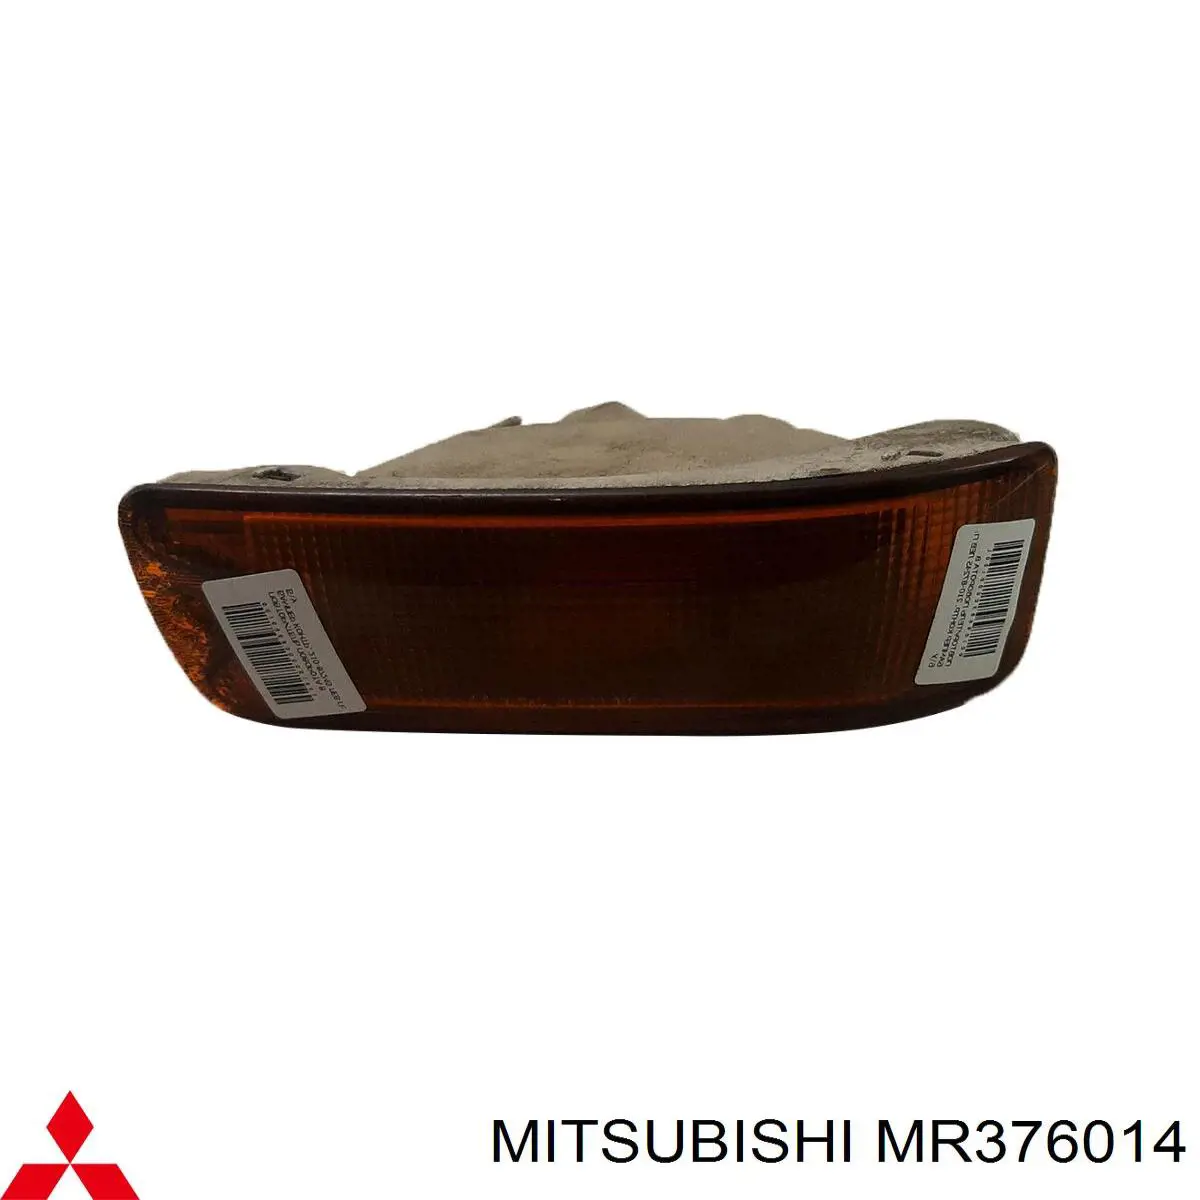 MR376014 Mitsubishi pisca-pisca direito